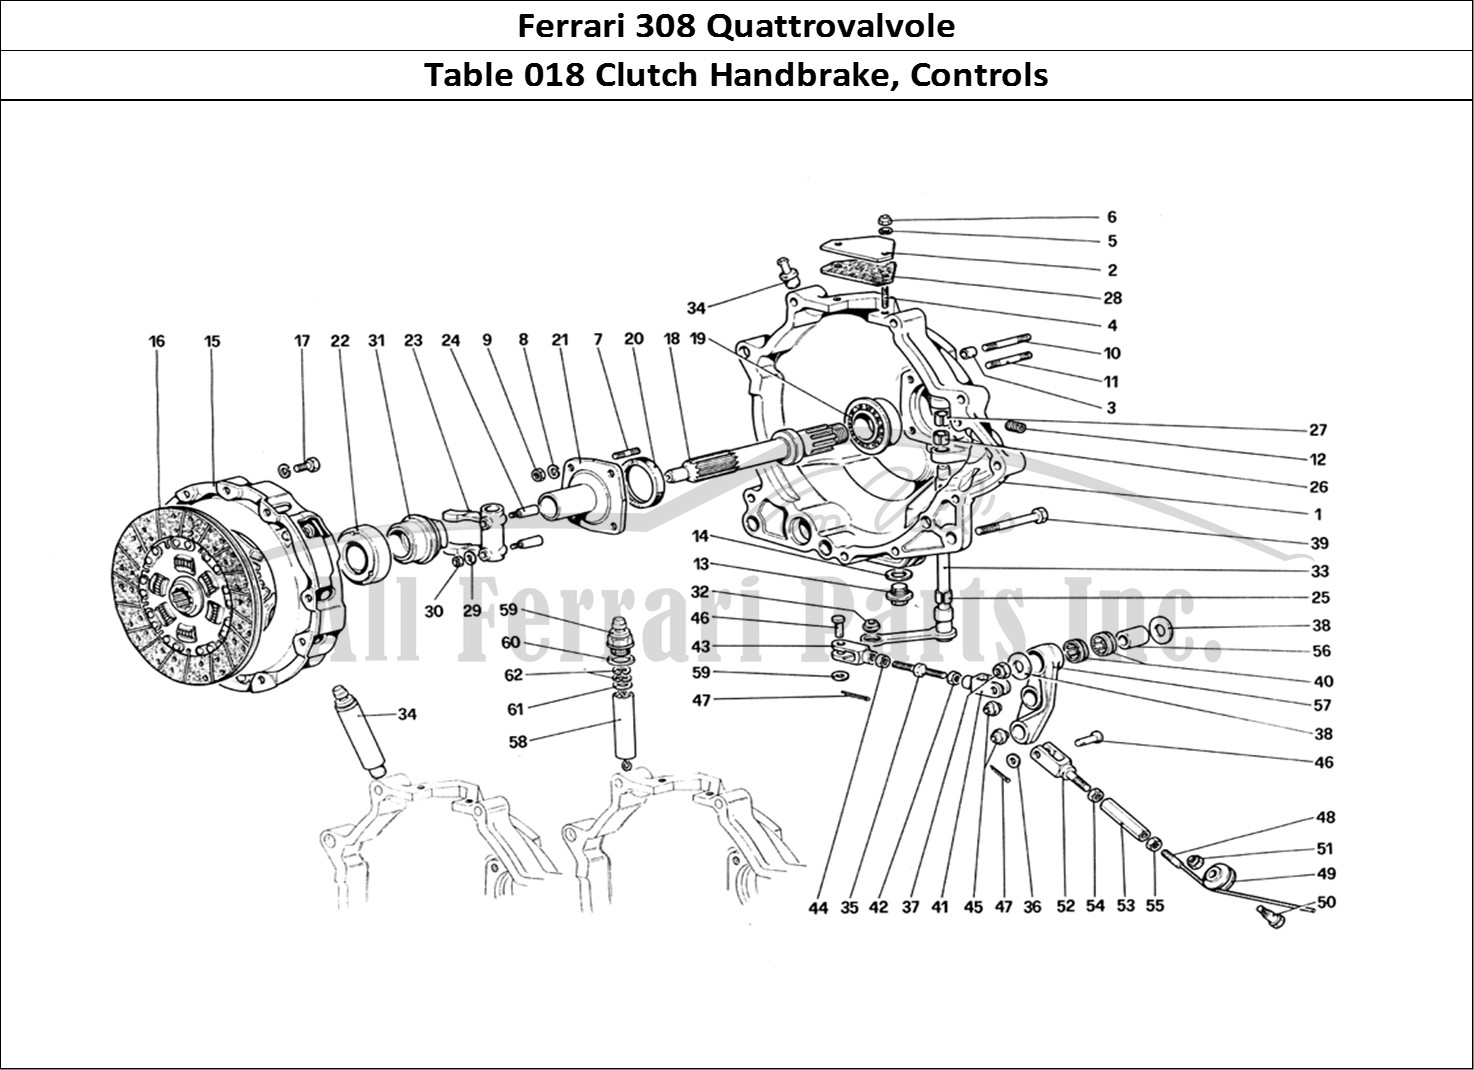 Ferrari Parts Ferrari 308 Quattrovalvole (1985) Page 018 Clutch and Controls